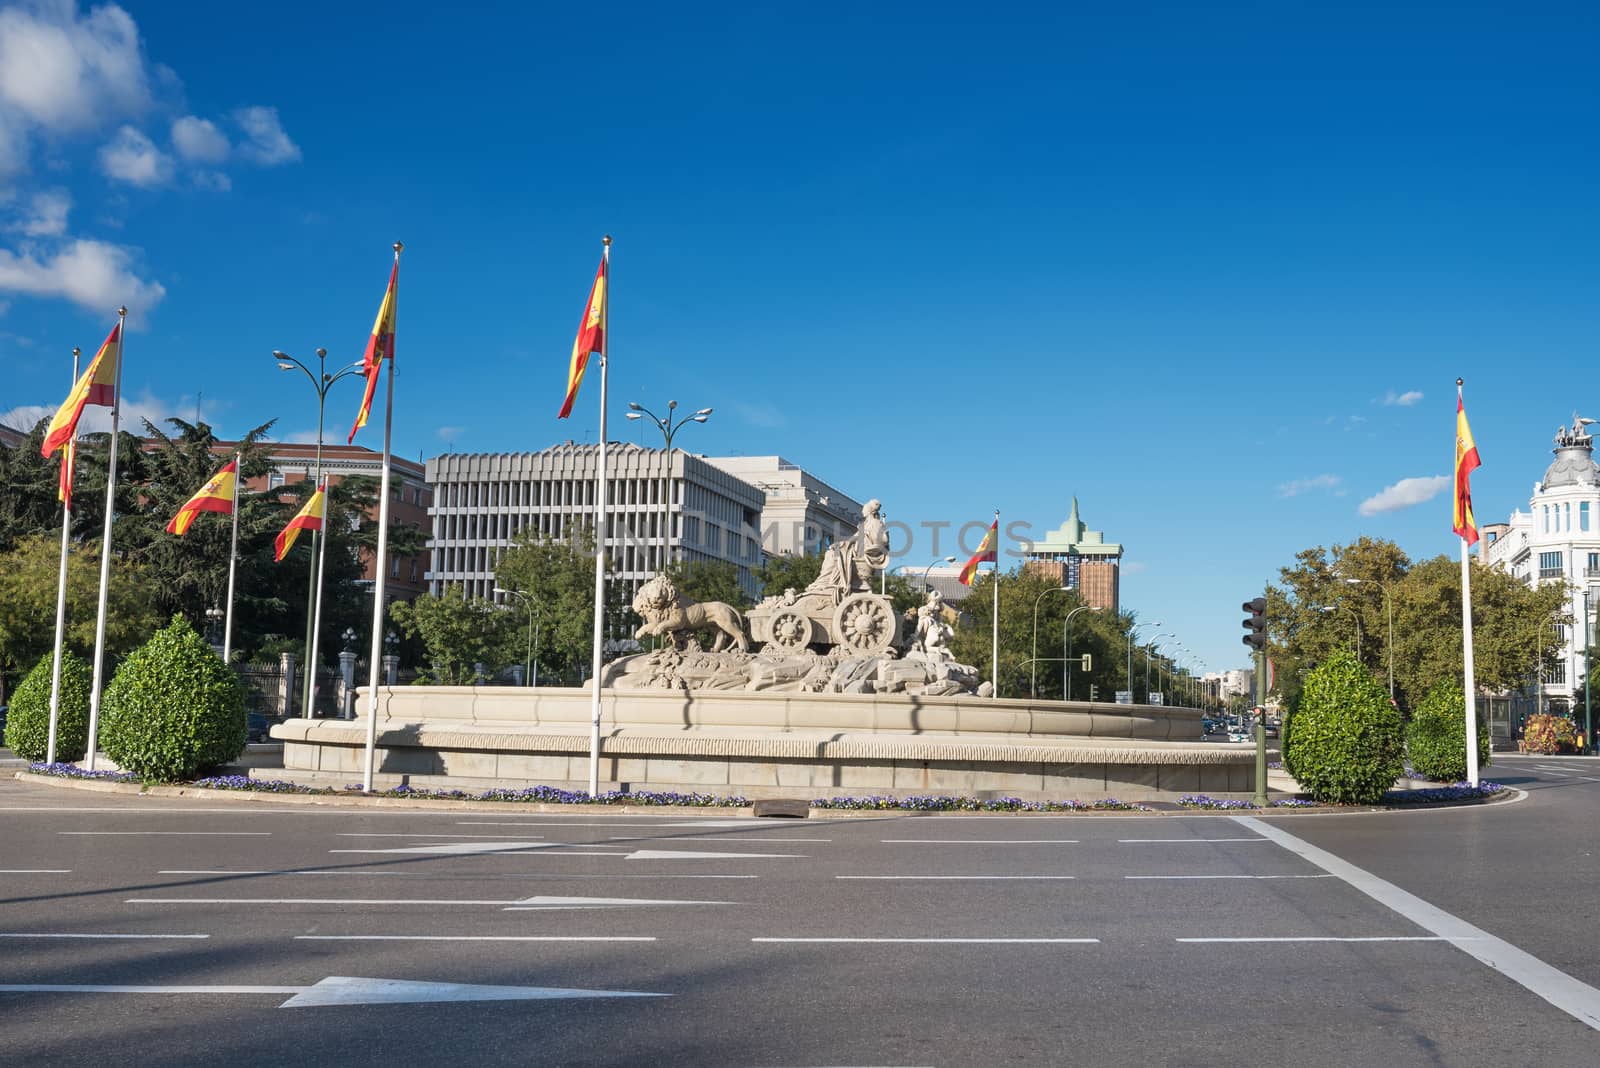 Famous cibeles fountain landmark in Cibeles square, Madrid, Spain.